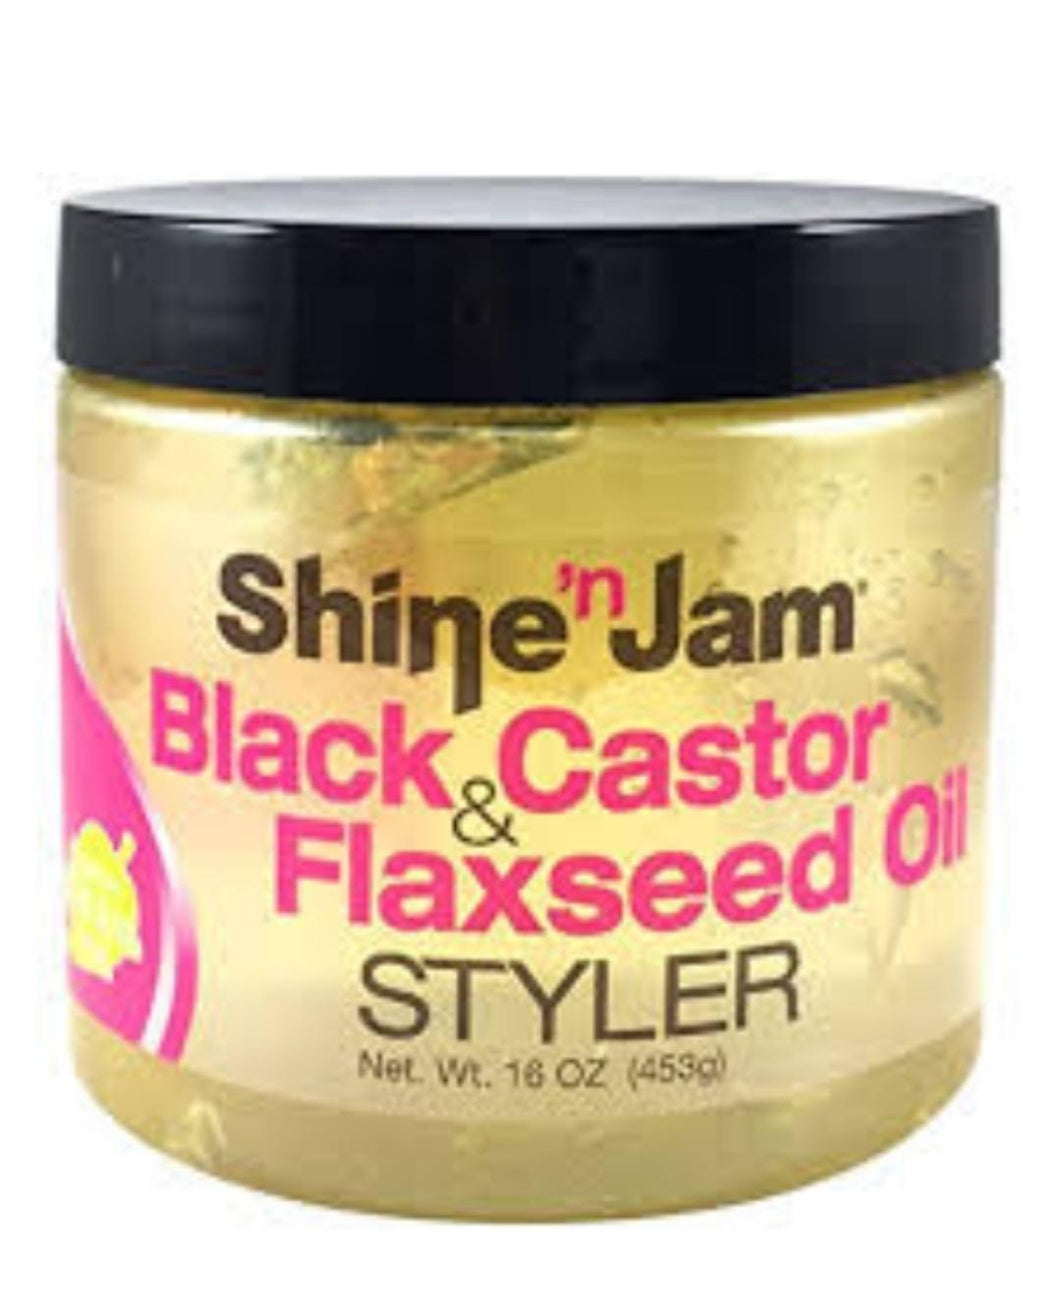 Shine n Jam Black&Castor Flaxseed Oil